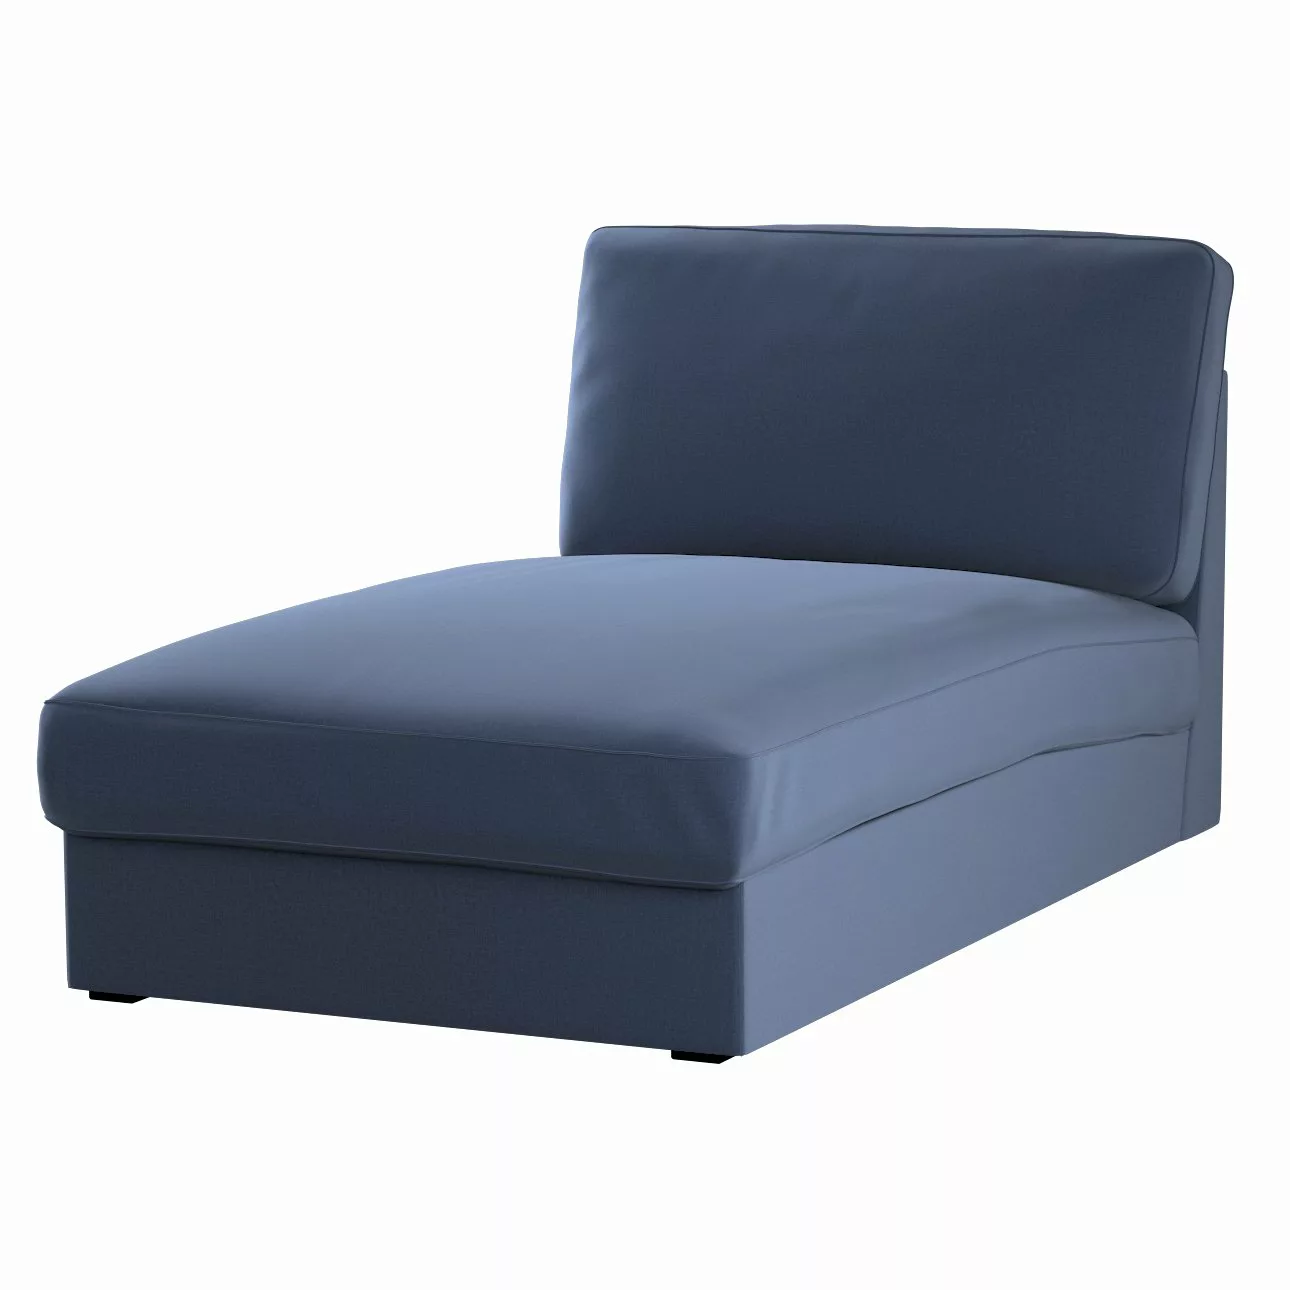 Bezug für Kivik Recamiere Sofa, dunkelblau, Bezug für Kivik Recamiere, Ingr günstig online kaufen